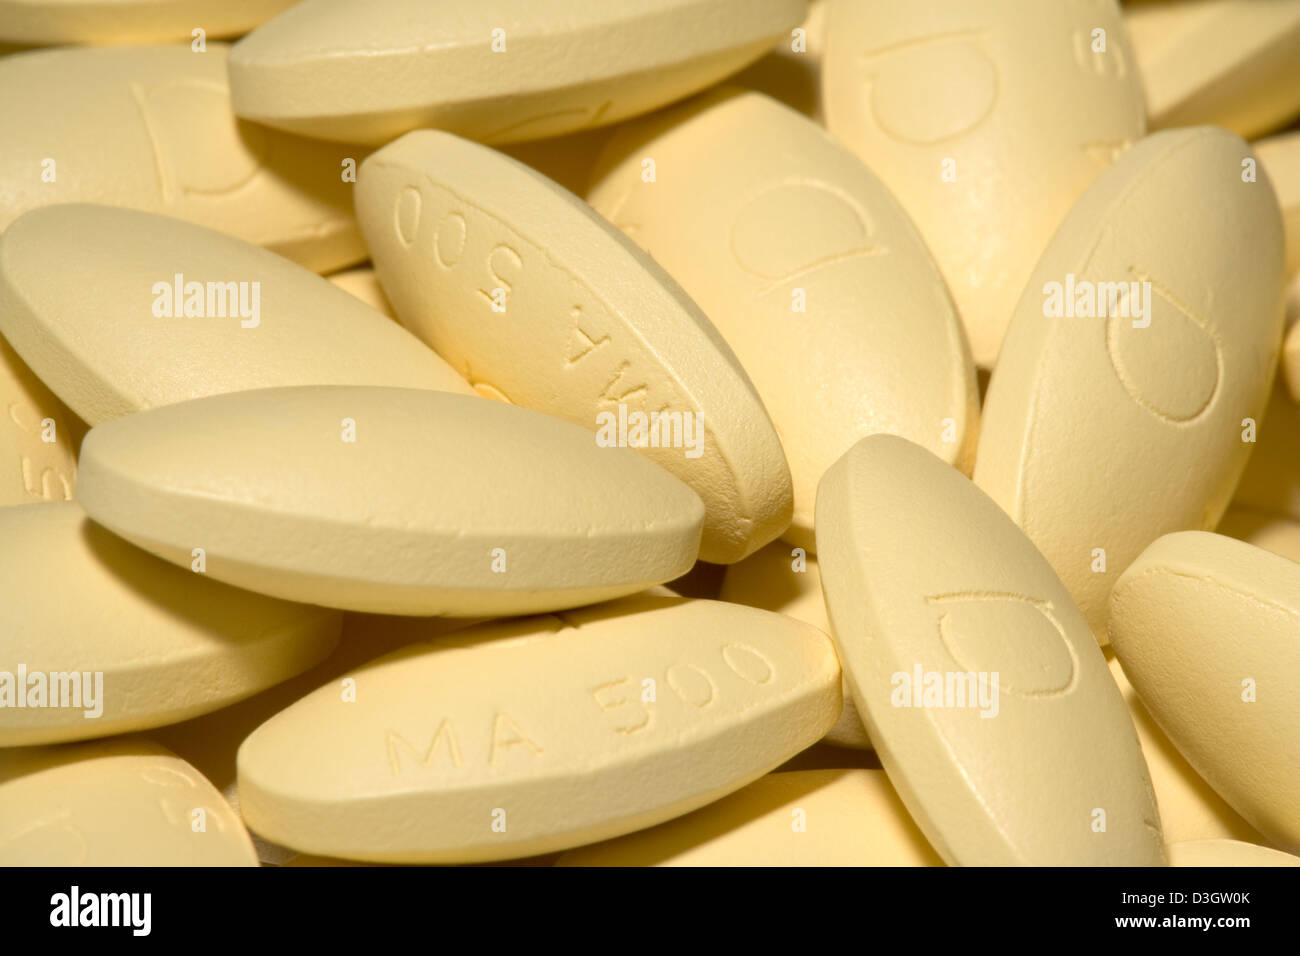 Mefenamic acid tablets Ponstan stomach cramps pangs pains ...